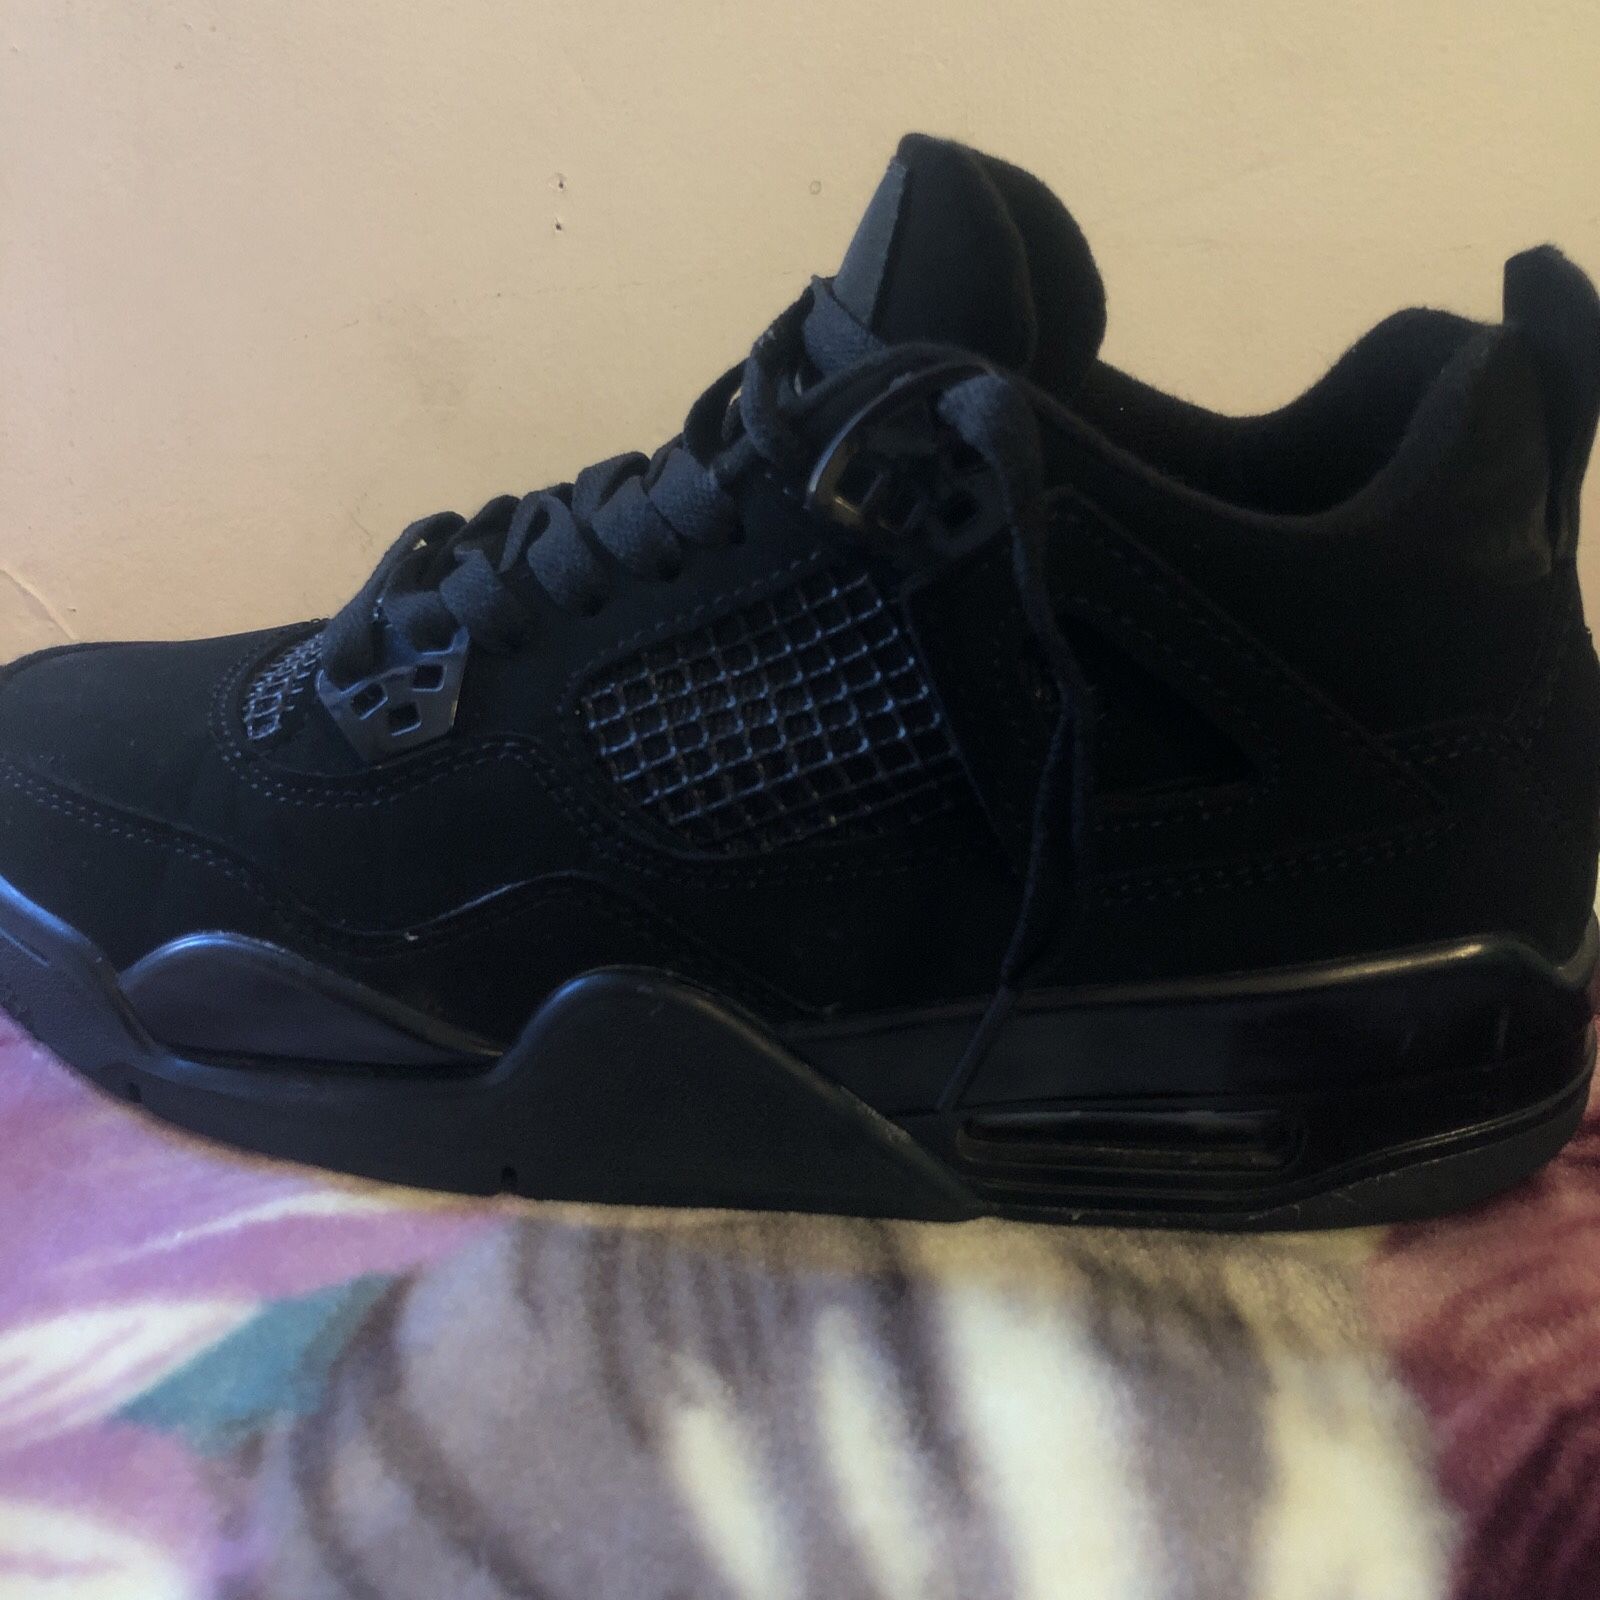 Air Jordan 4 Retro Black Cats 